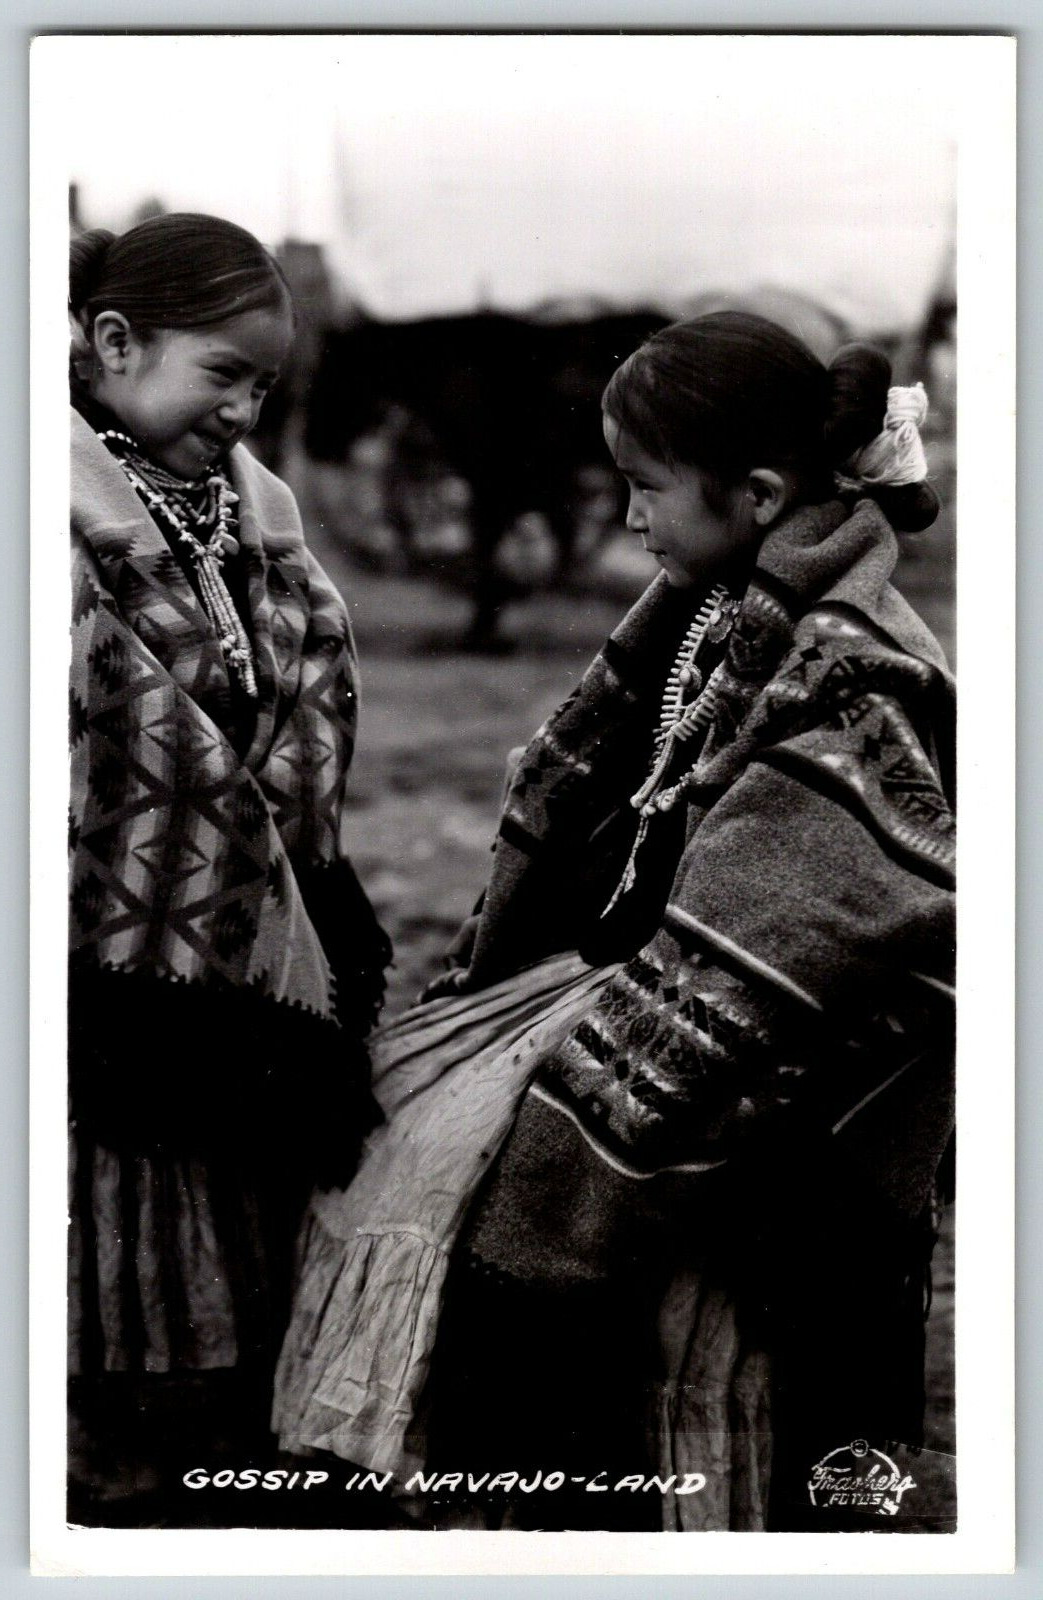 Arizona - Two Lovely Navajo Girls, Gossip In Navajo-Land - RPPC Vintage Postcard